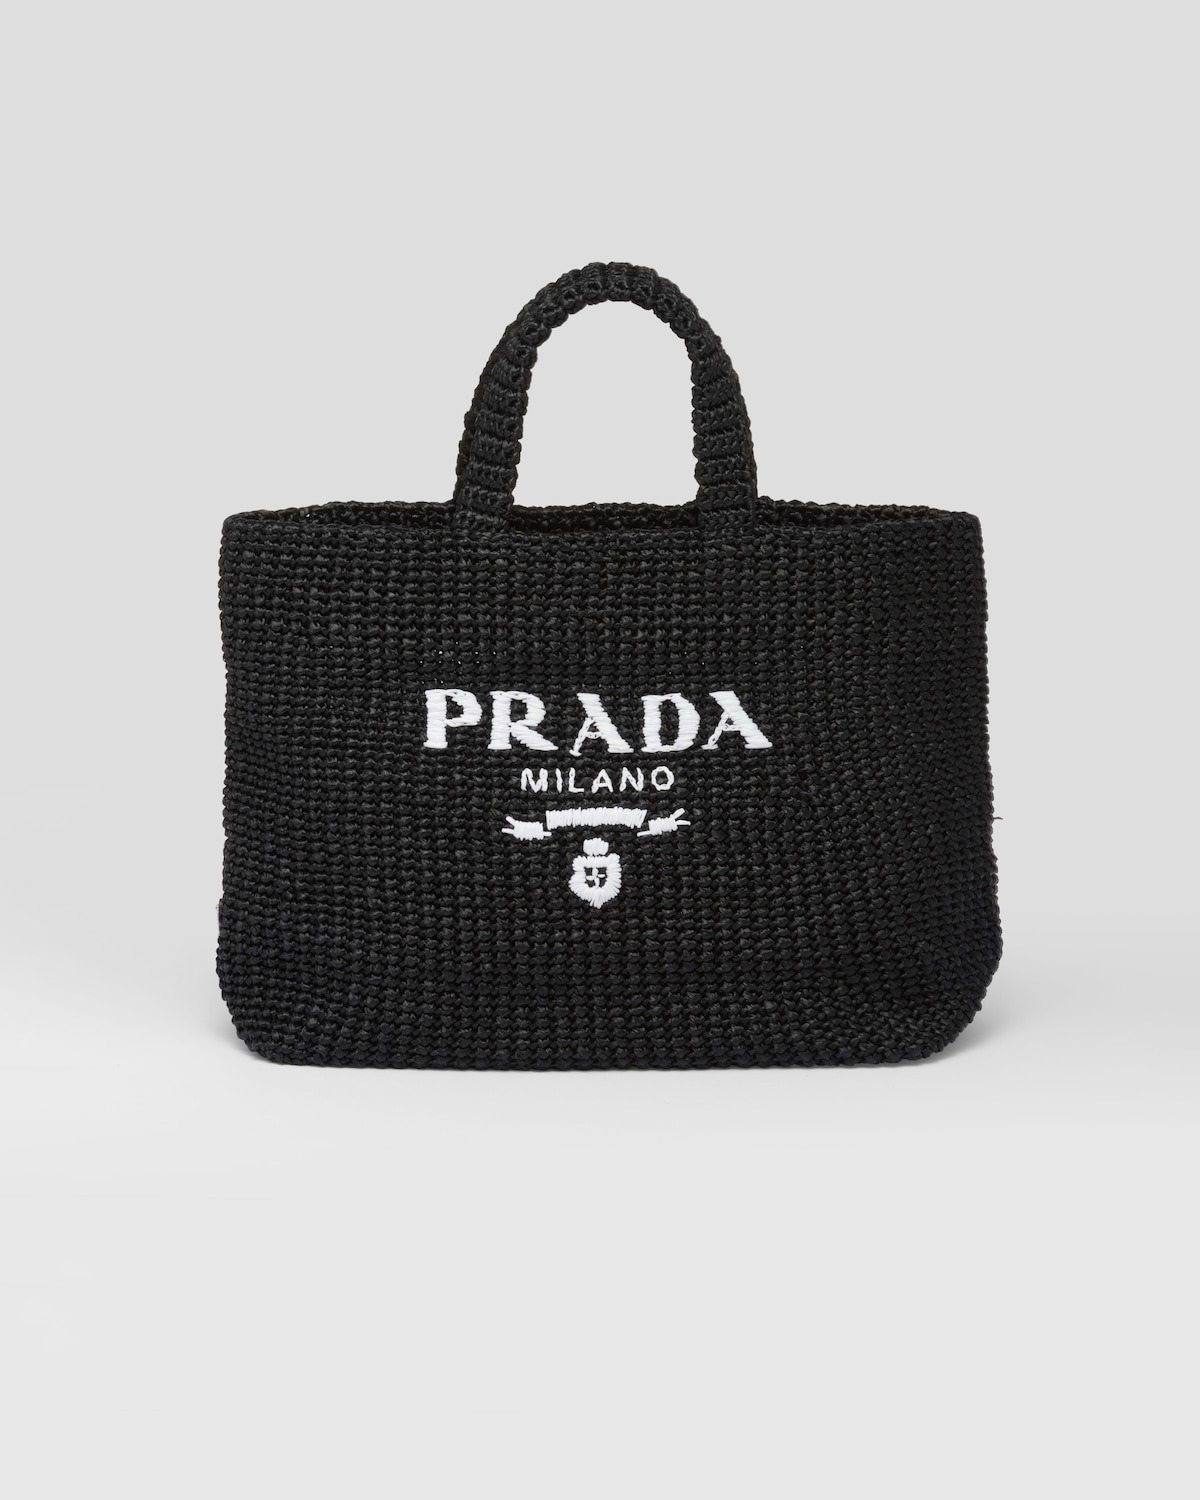 Gigi Hadid Turned a Prada Raffia Tote Into an Airport Bag